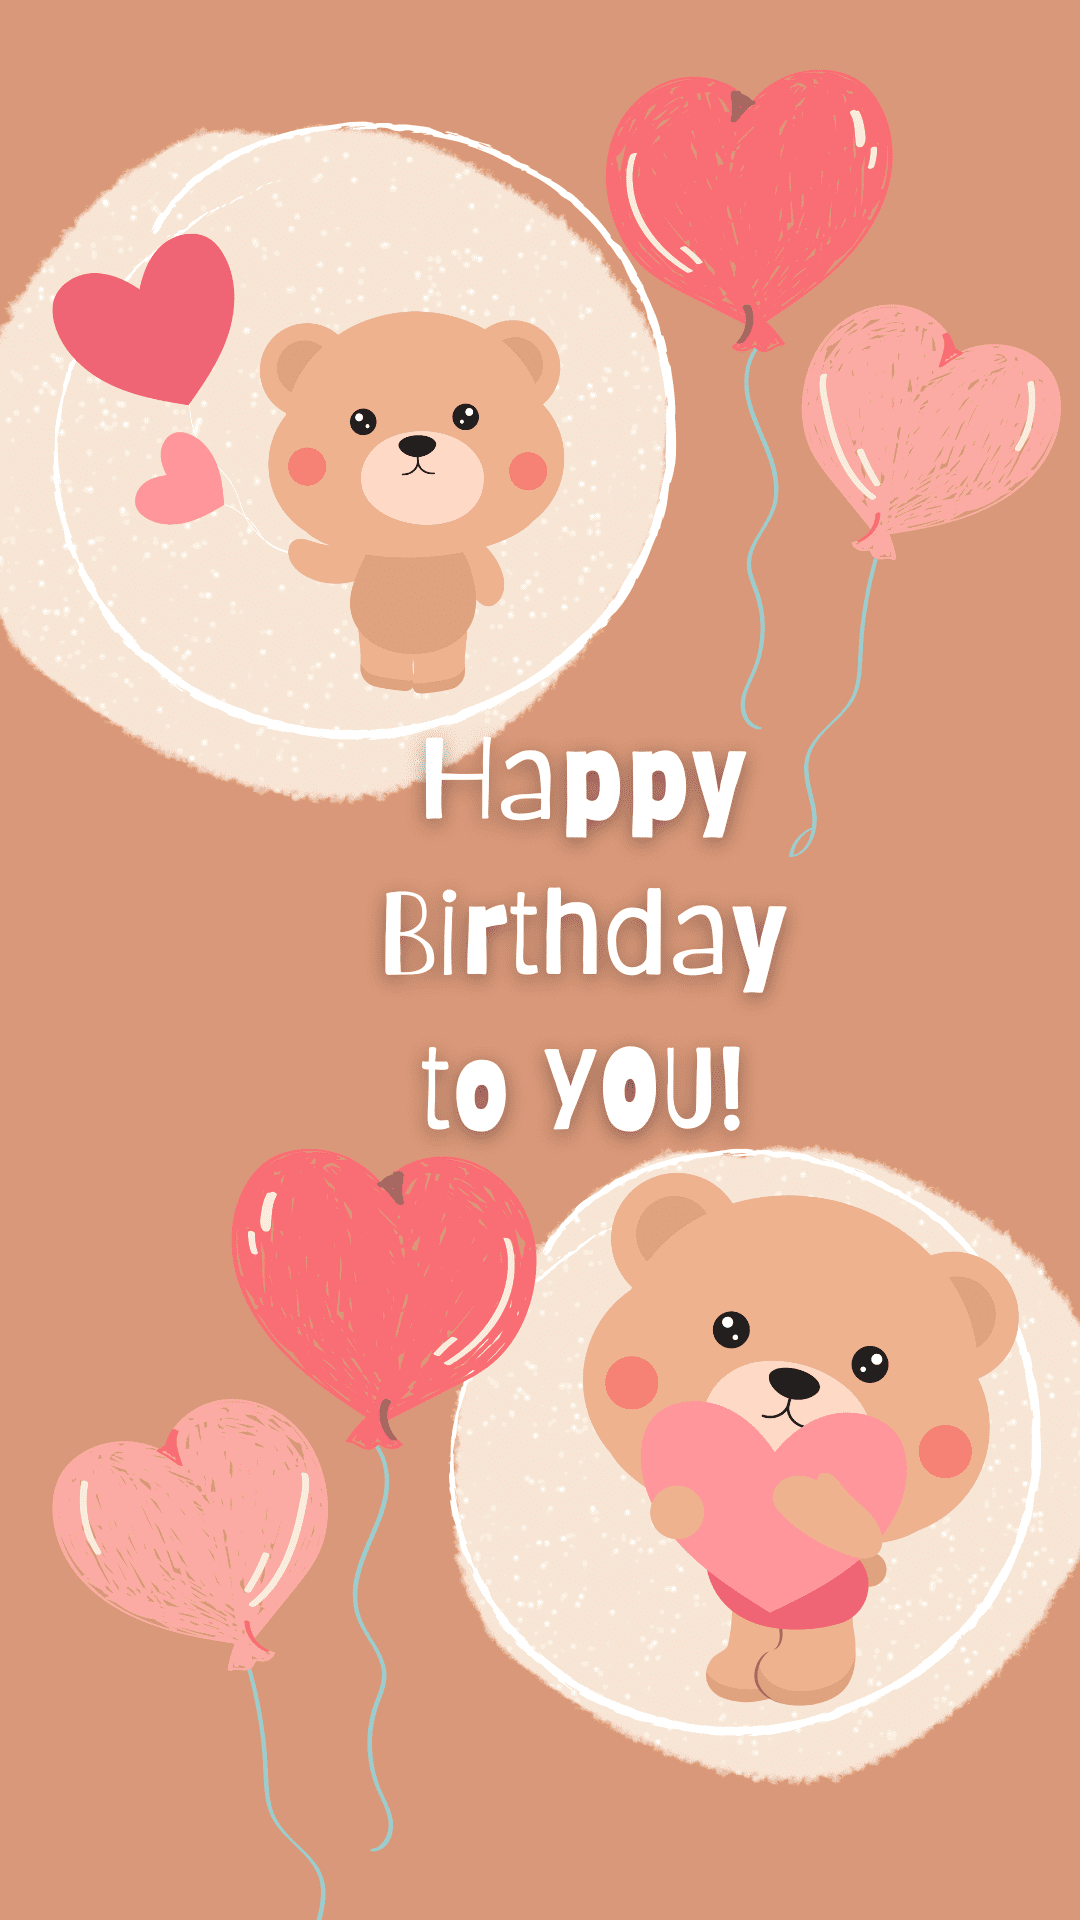 Happy Birthday to you! Birthday Wishes for Kids - Moonzori Wishes